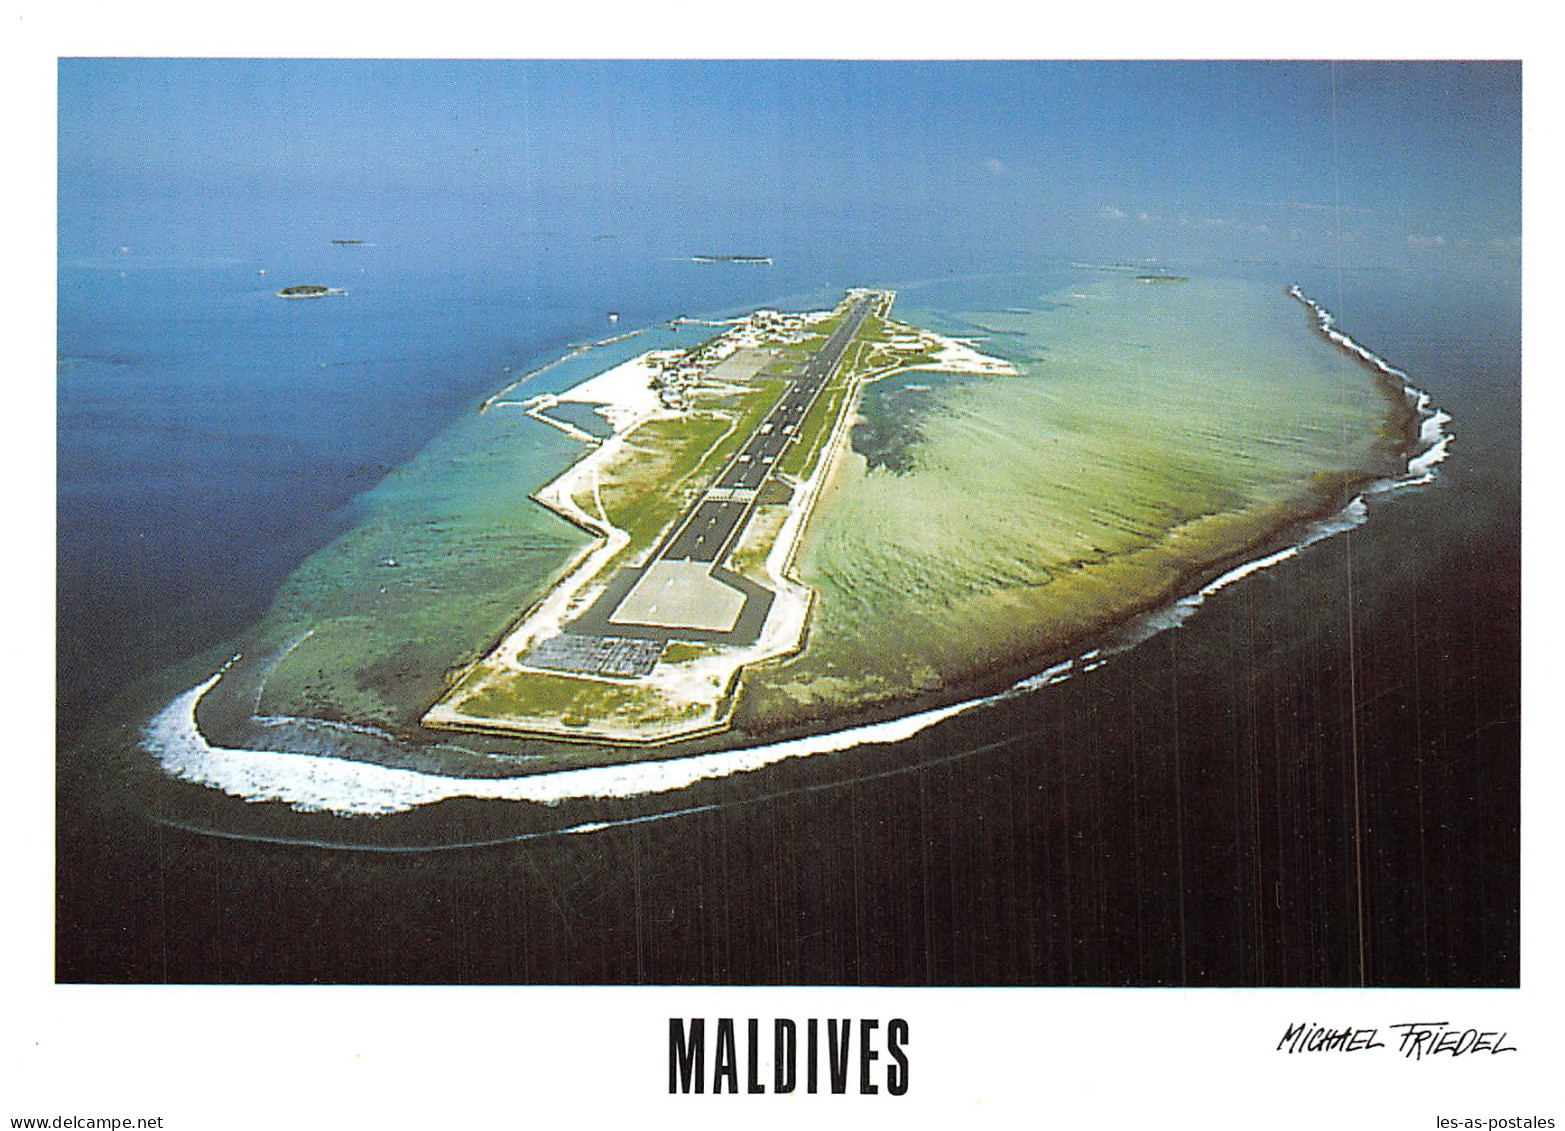 MALDIVES - Maldive